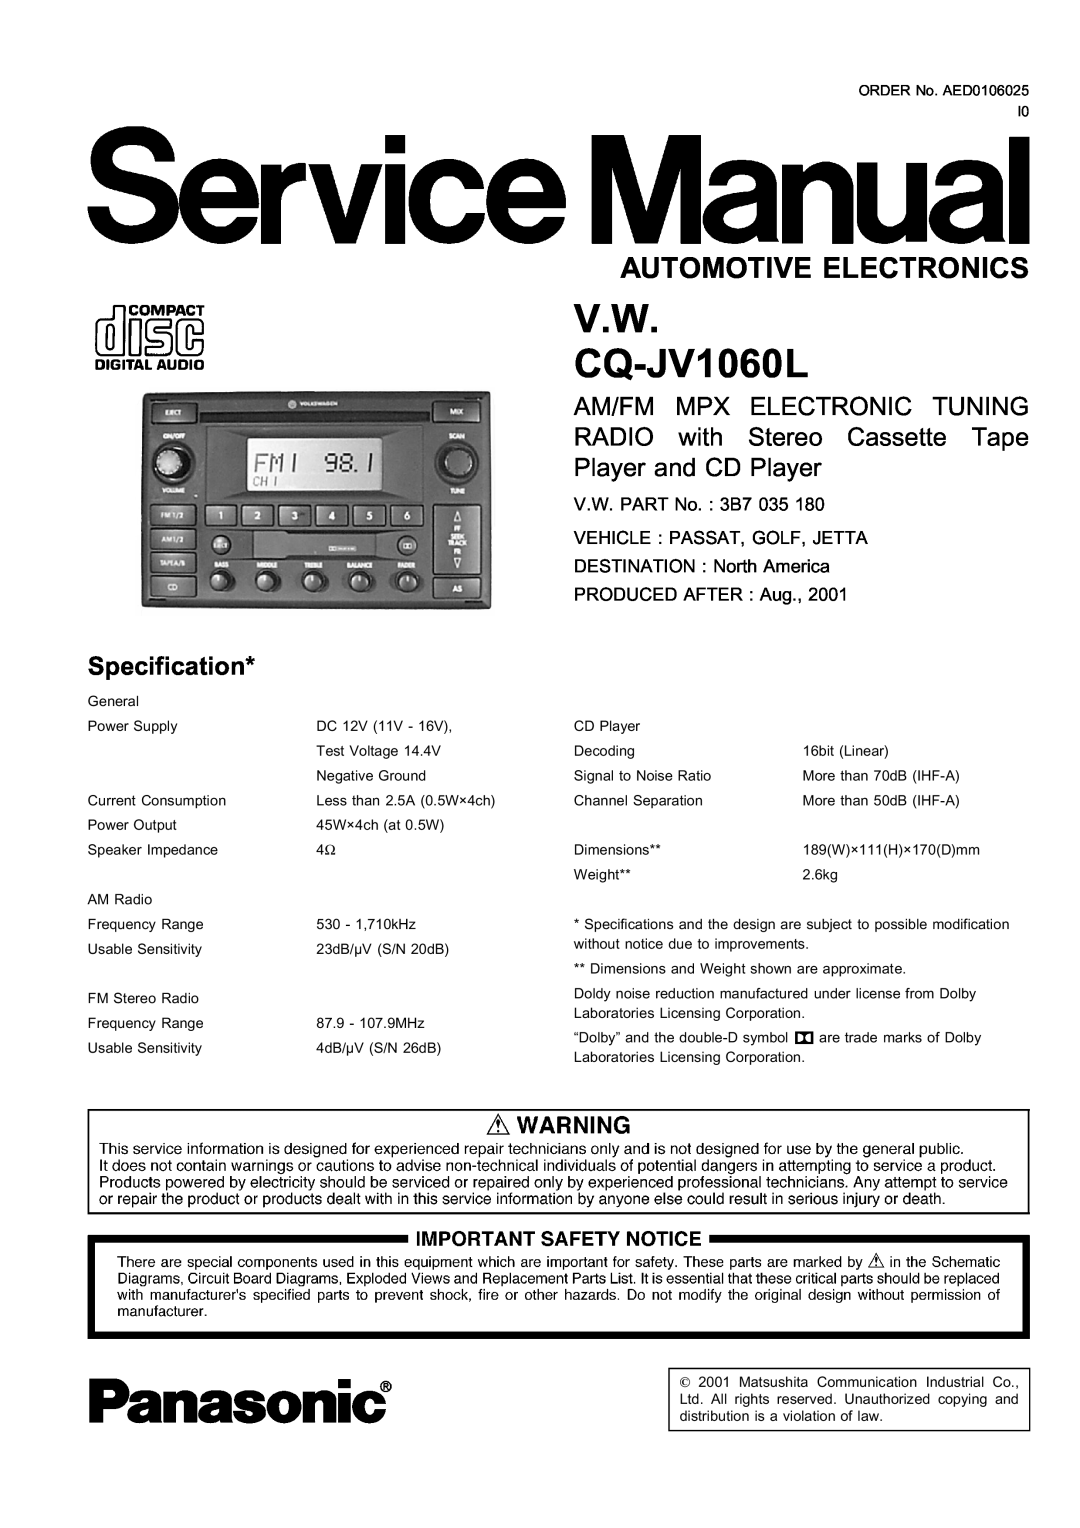 Panasonic dimensions Automotive Electronics, Specification, V.W CQ-JV1060L, Am/Fm Mpx, Electronic Tuning 